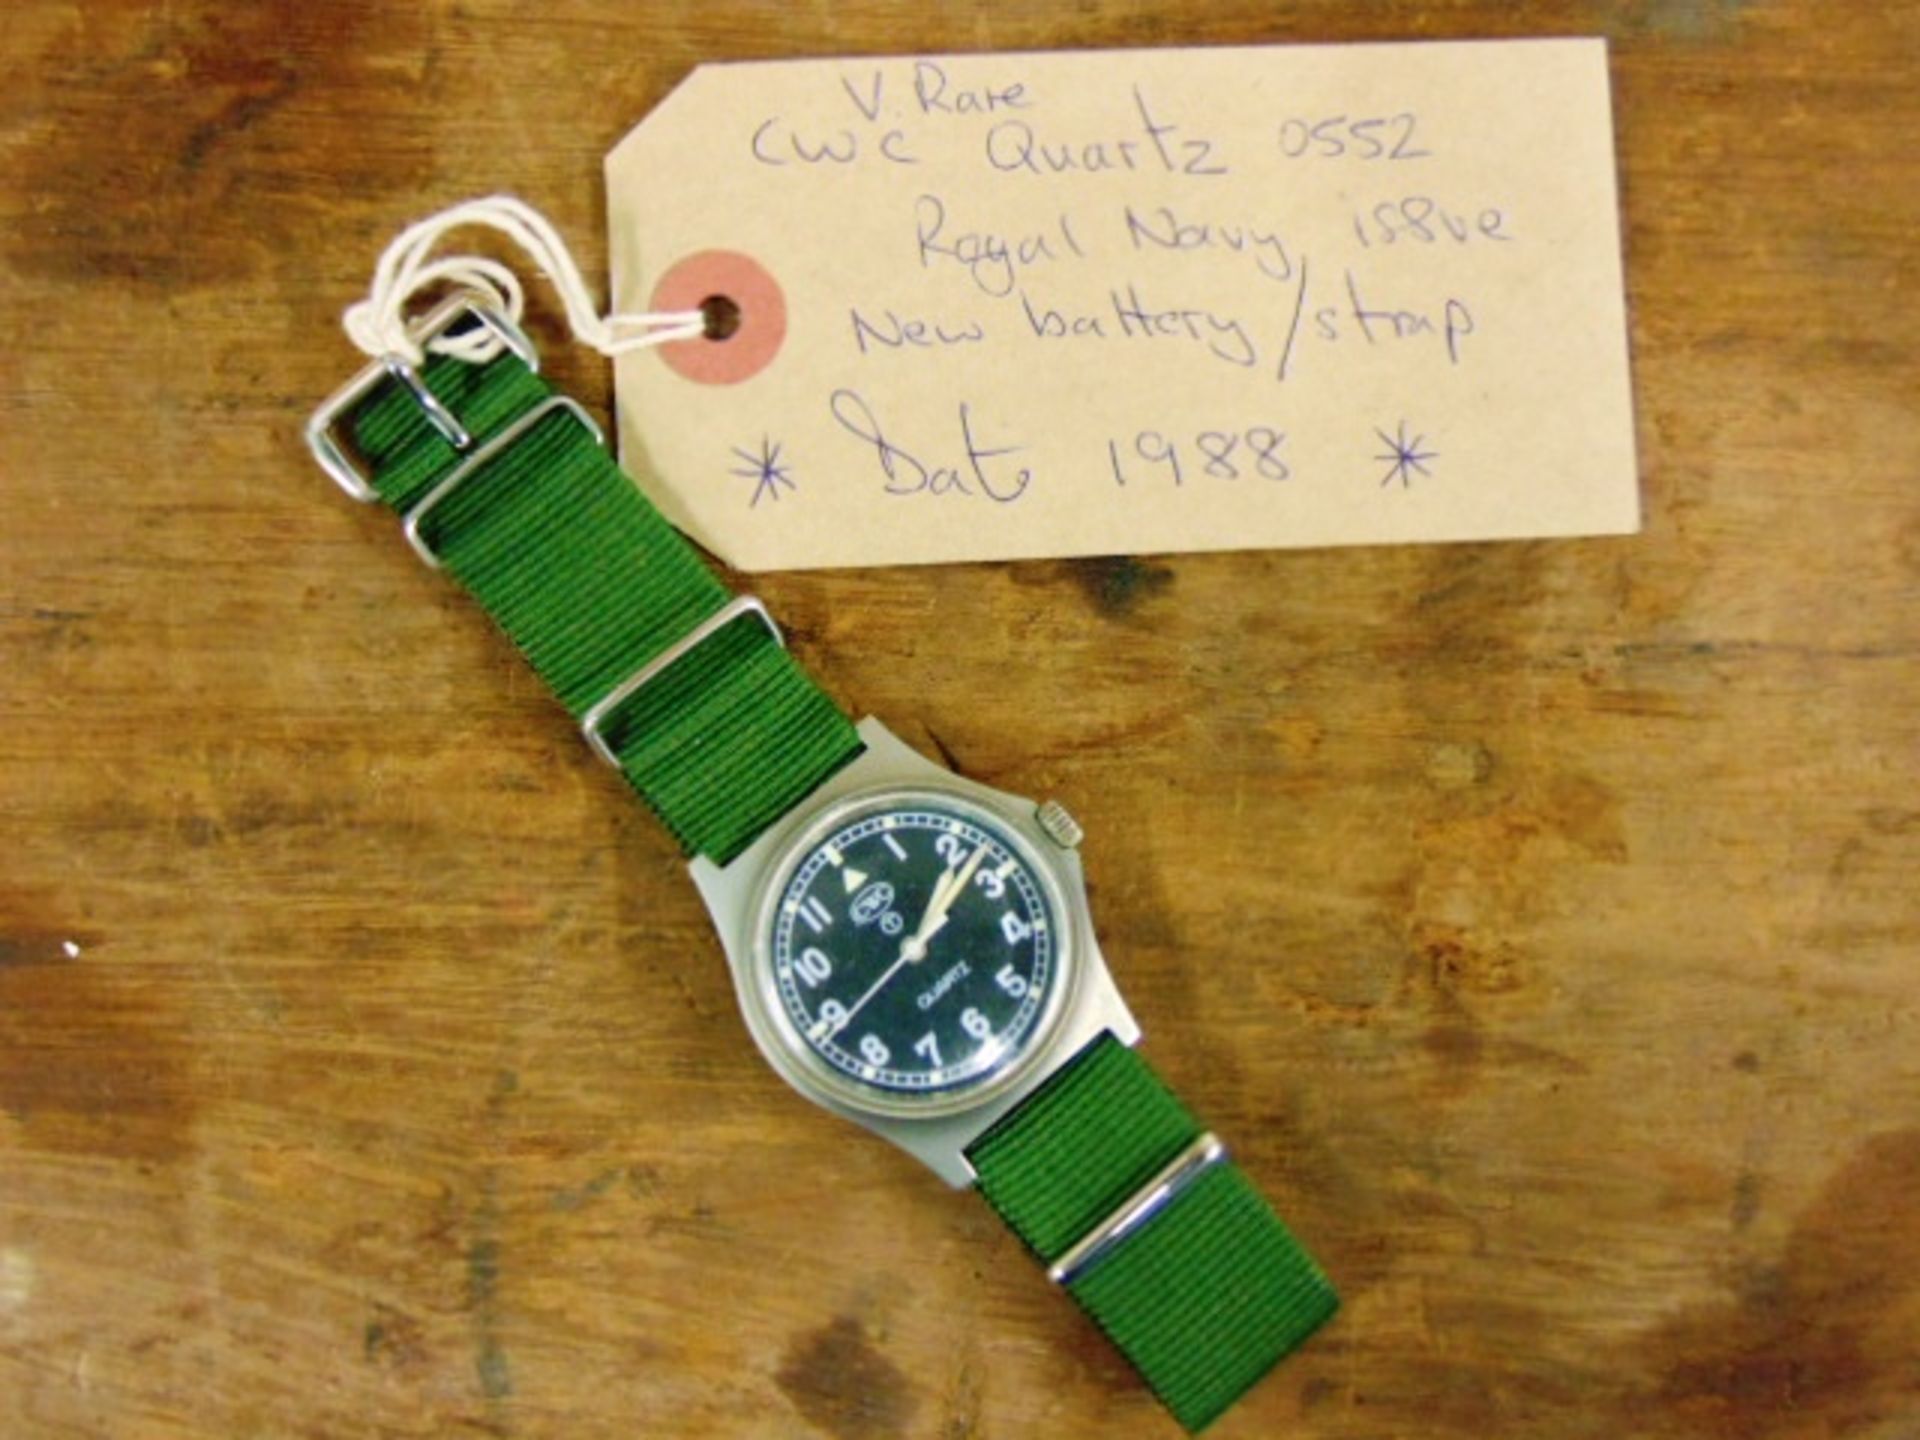 Royal Marines, Navy issue 0555, CWC quartz wrist watch